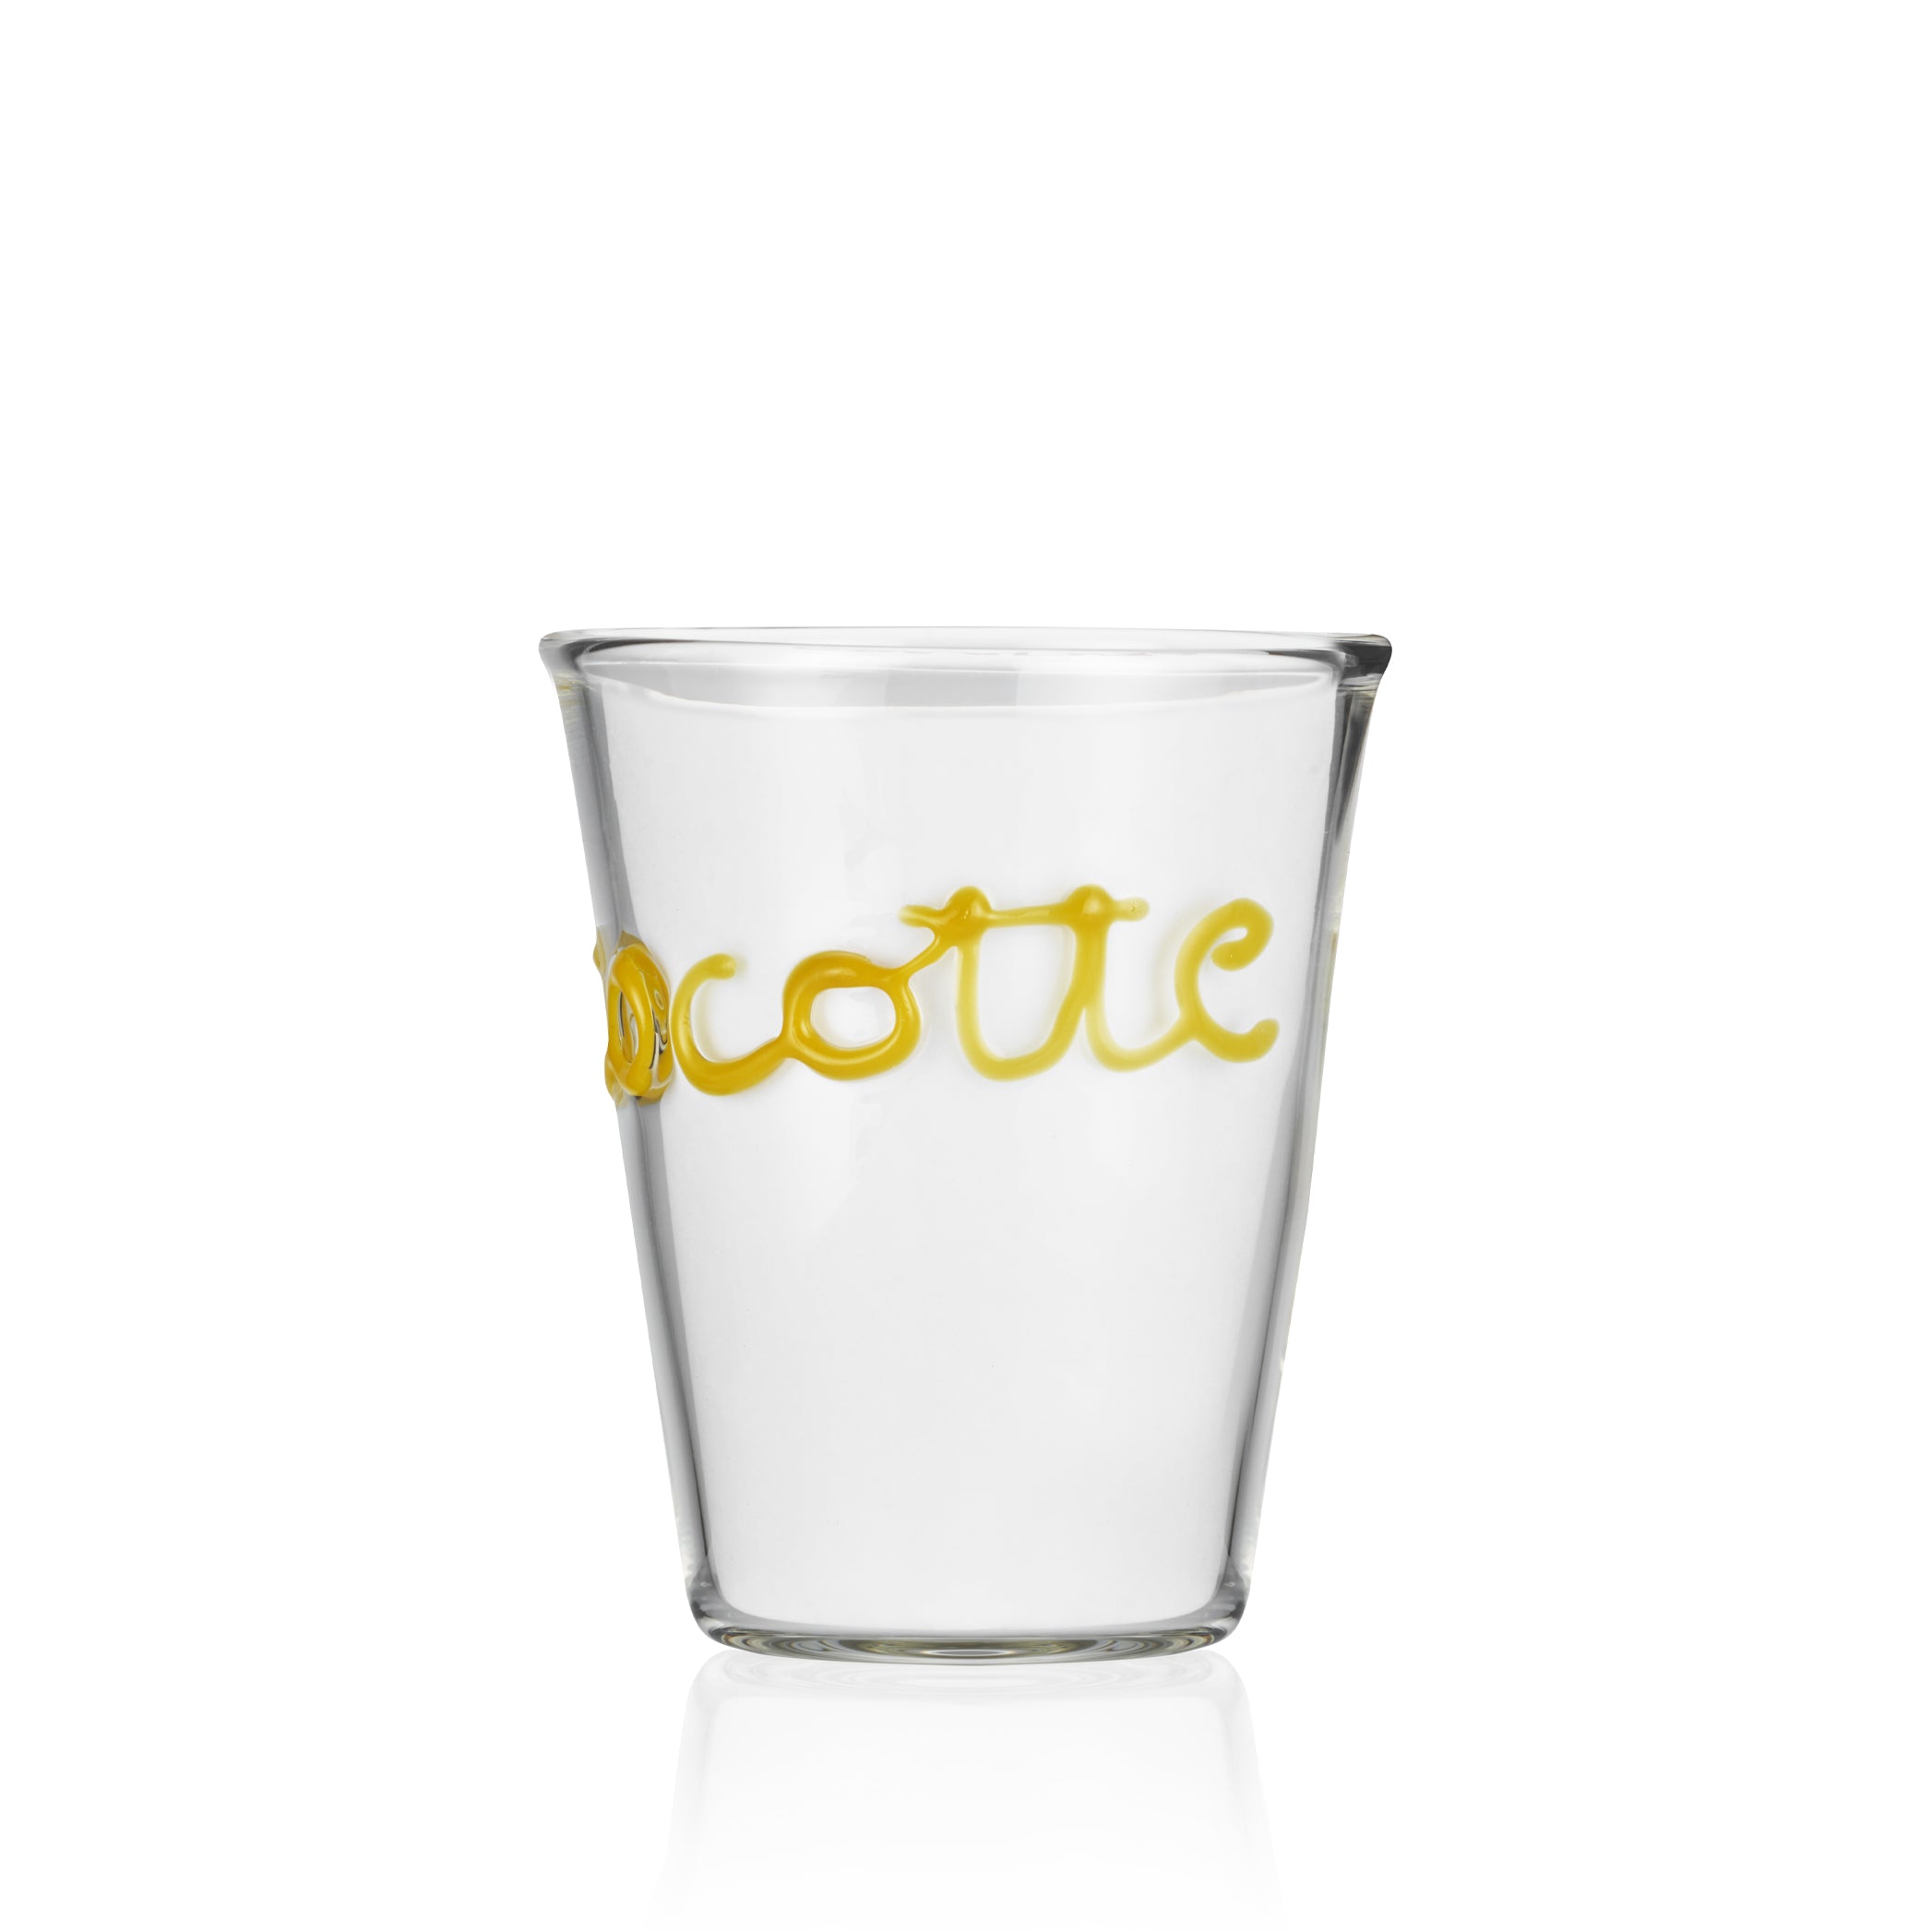 Handblown Glass "Cocotte" (Sweetie) Tumbler